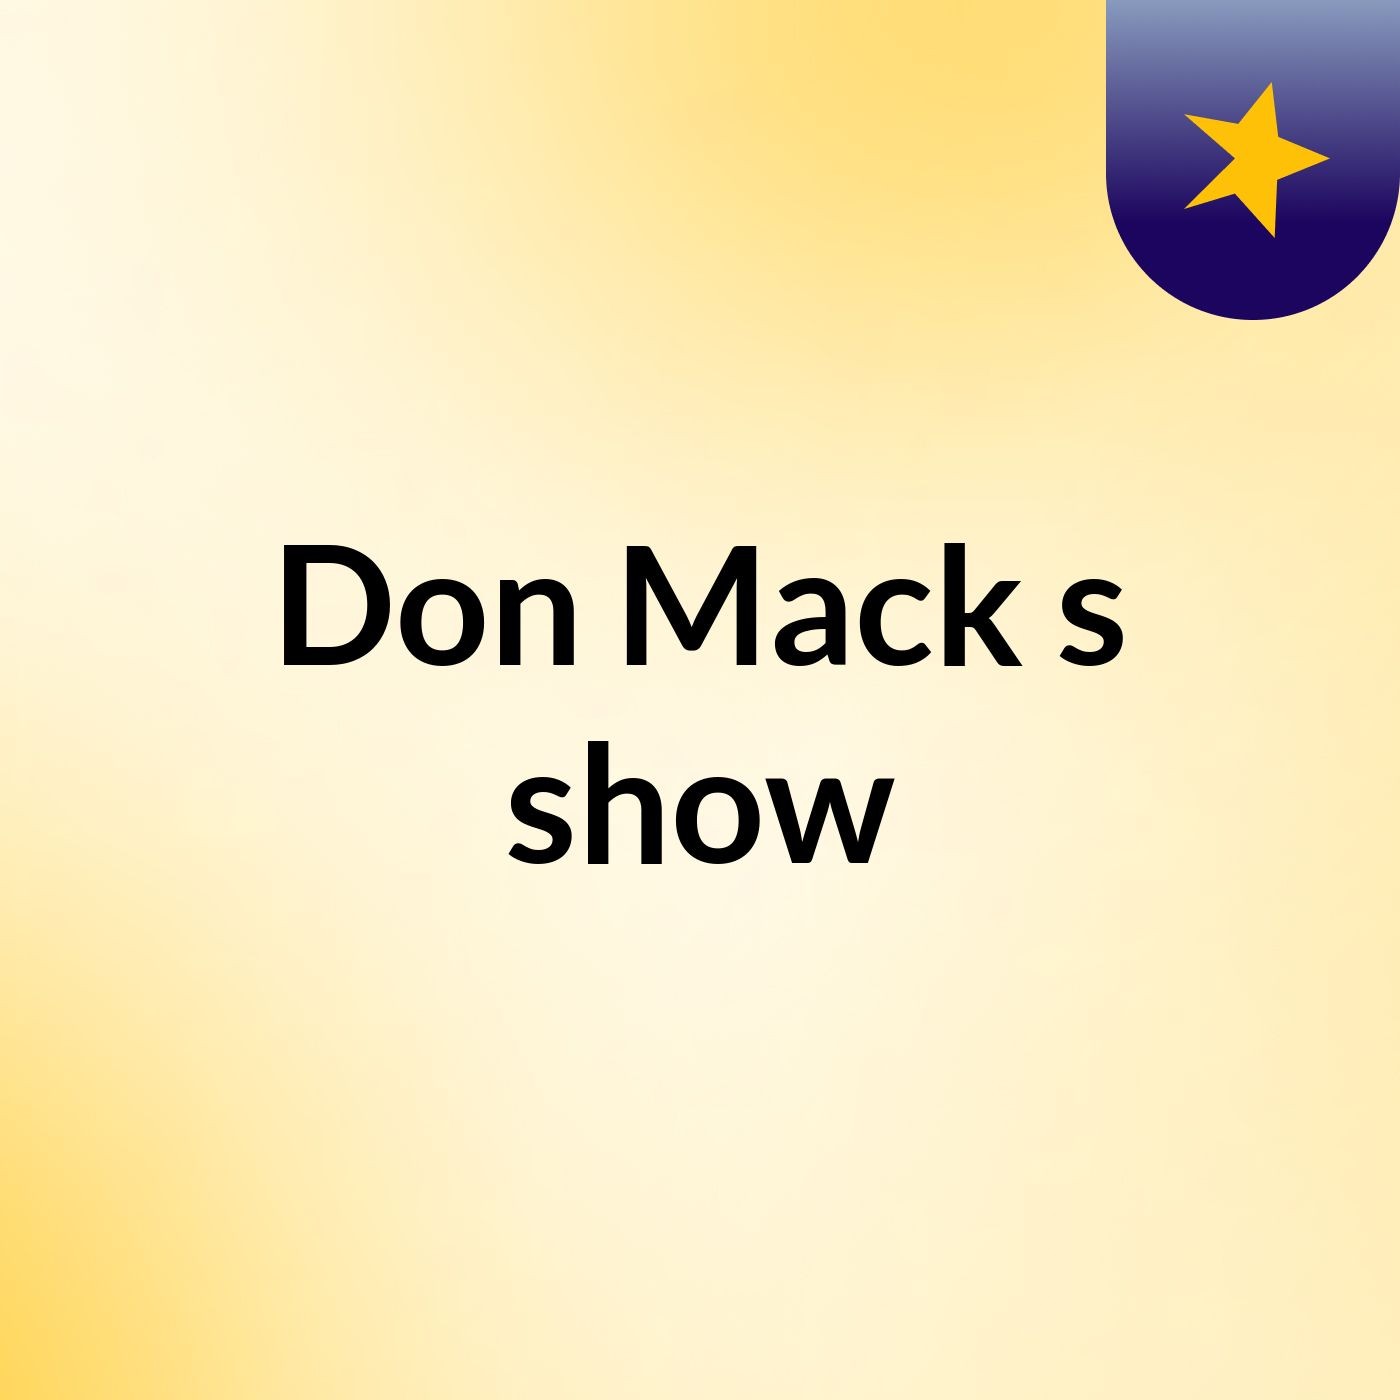 Don Mack's show